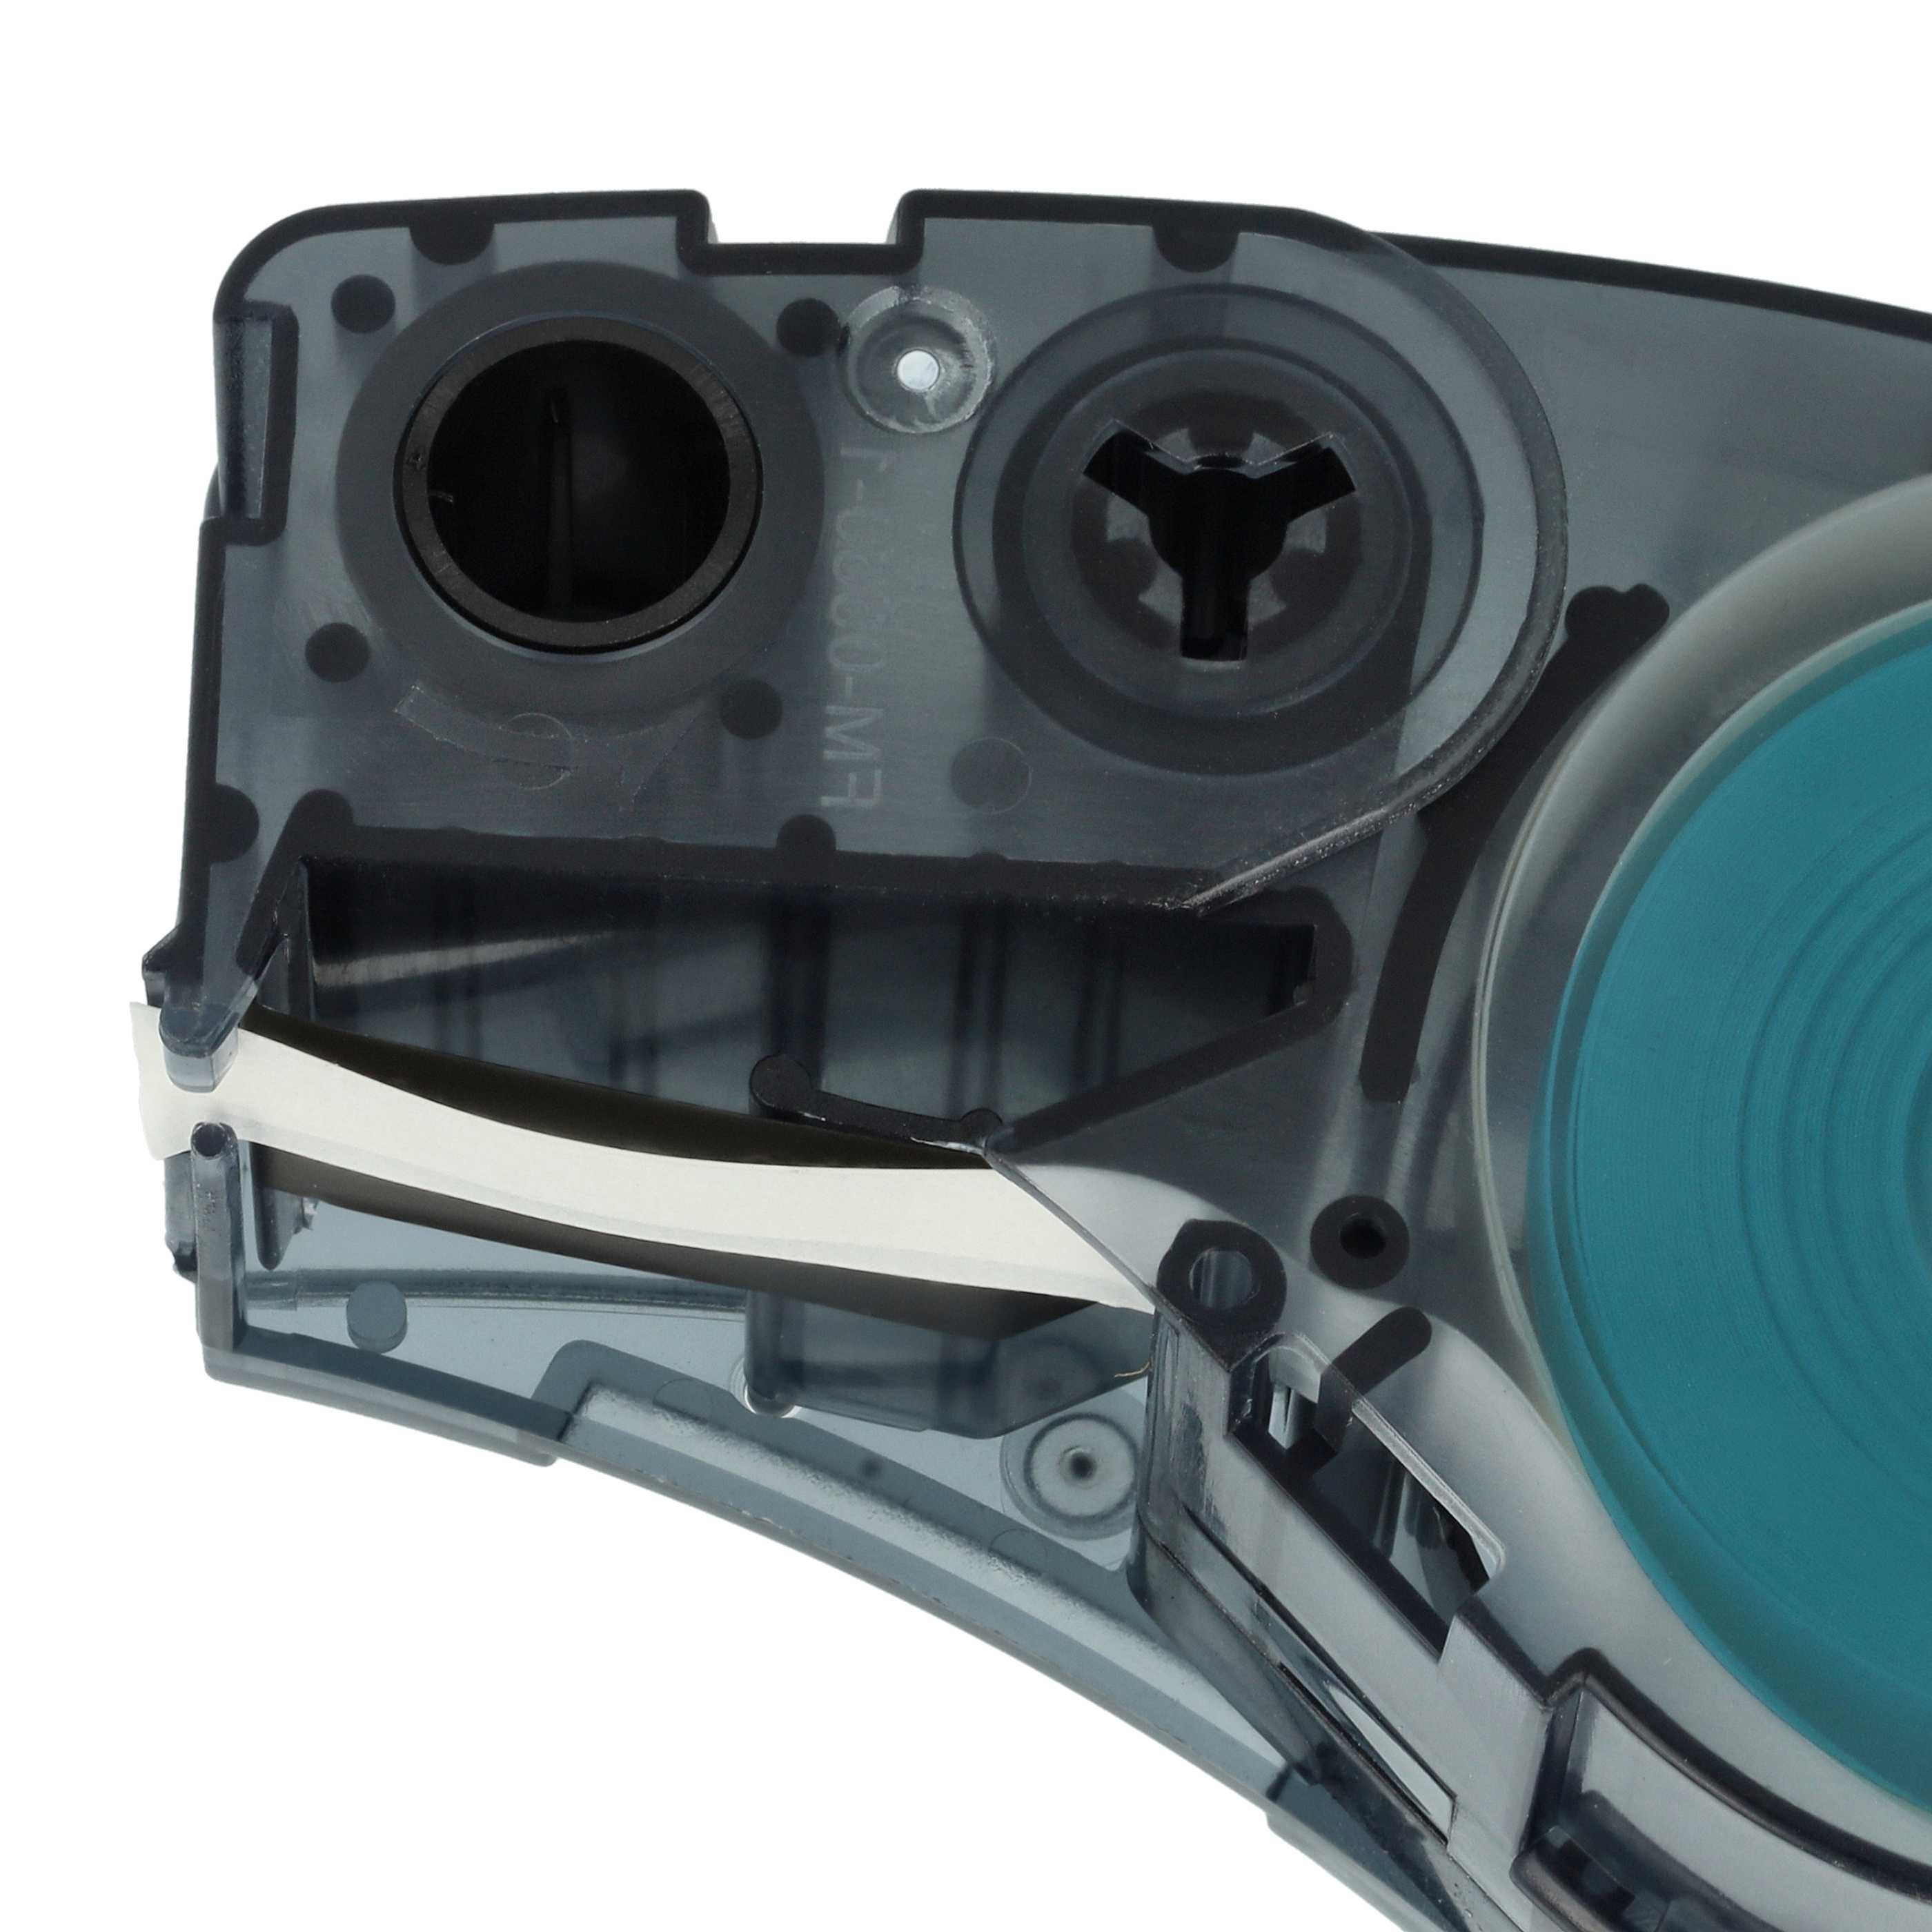 Cassetta nastro sostituisce Brady M21-375-7425 per etichettatrice Brady 9,5mm nero su bianco, polipropilene